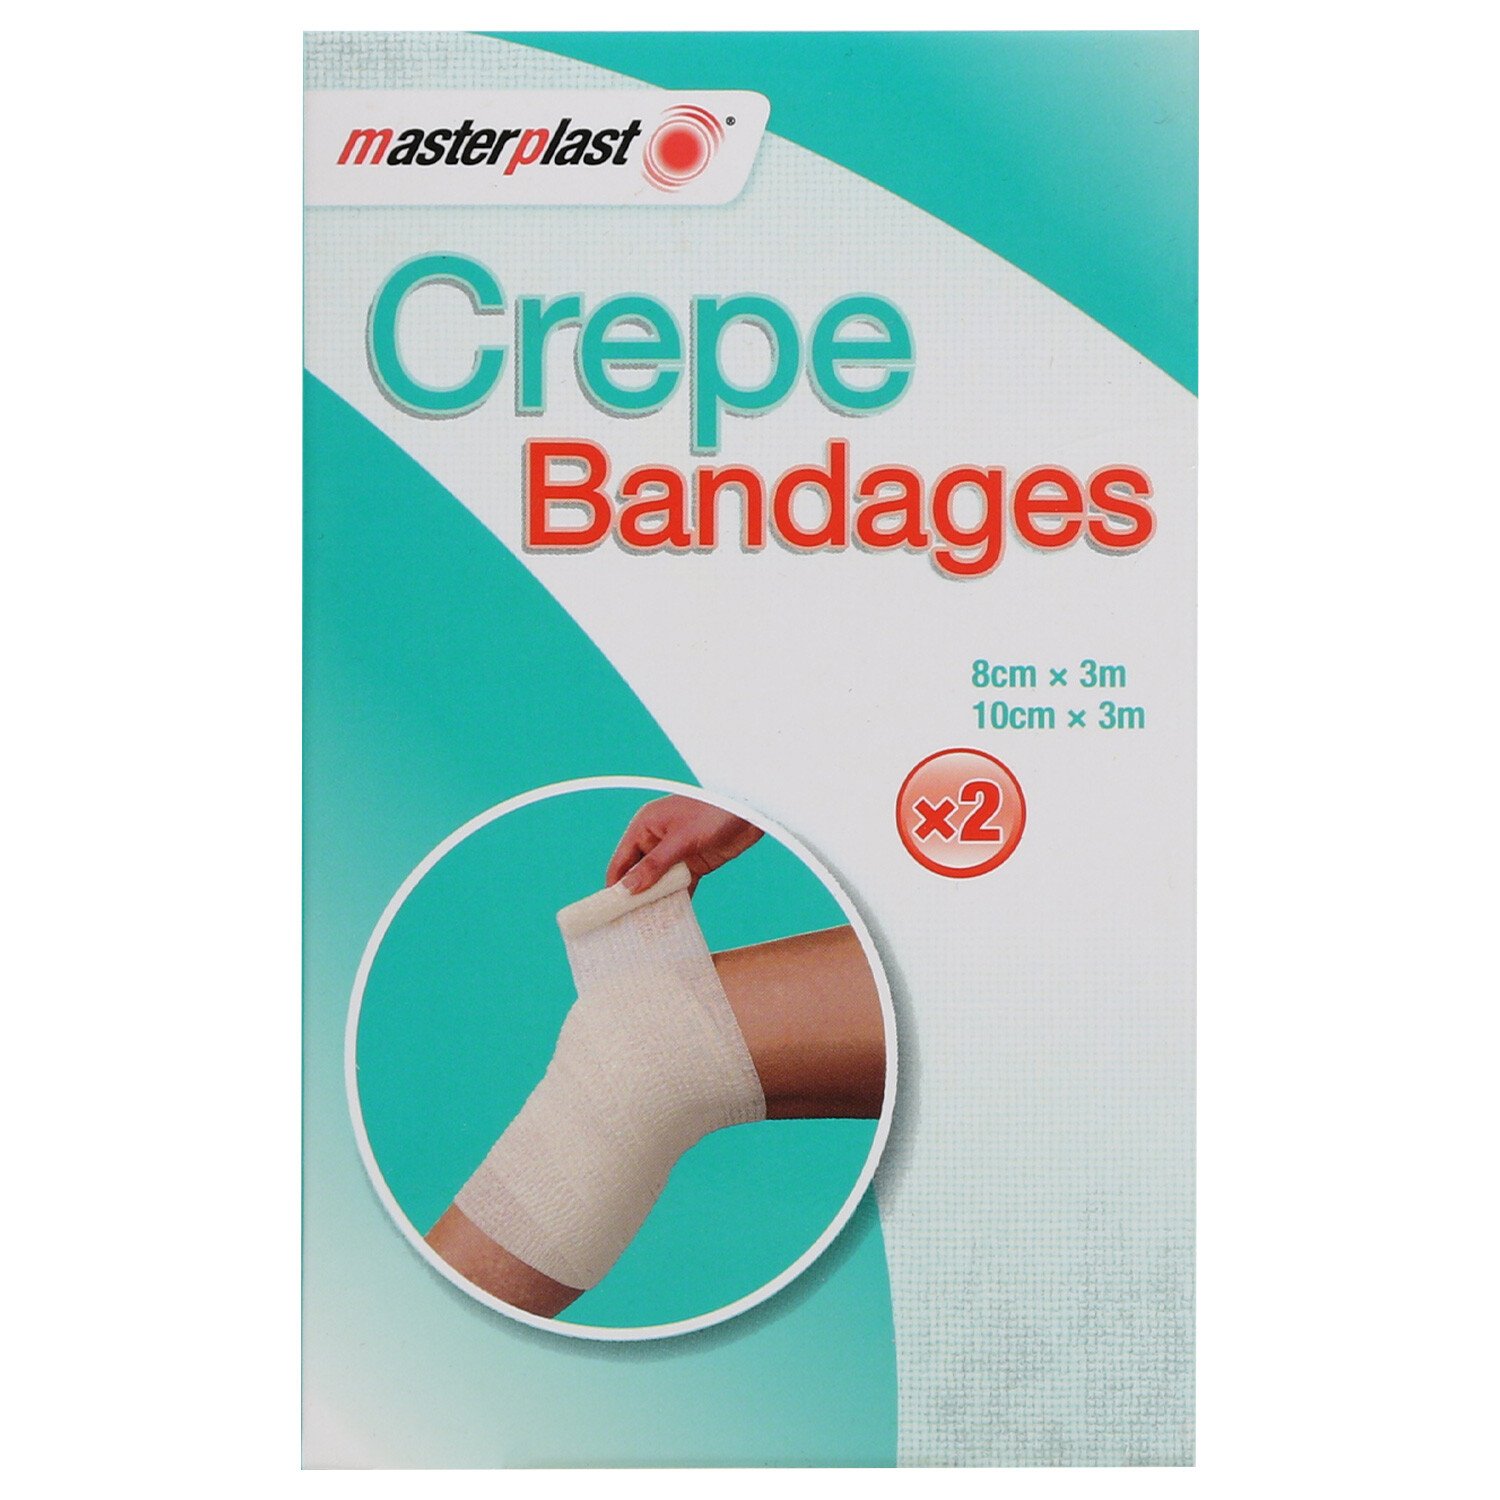 Pack of 2 Crepe Bandages - White Image 1